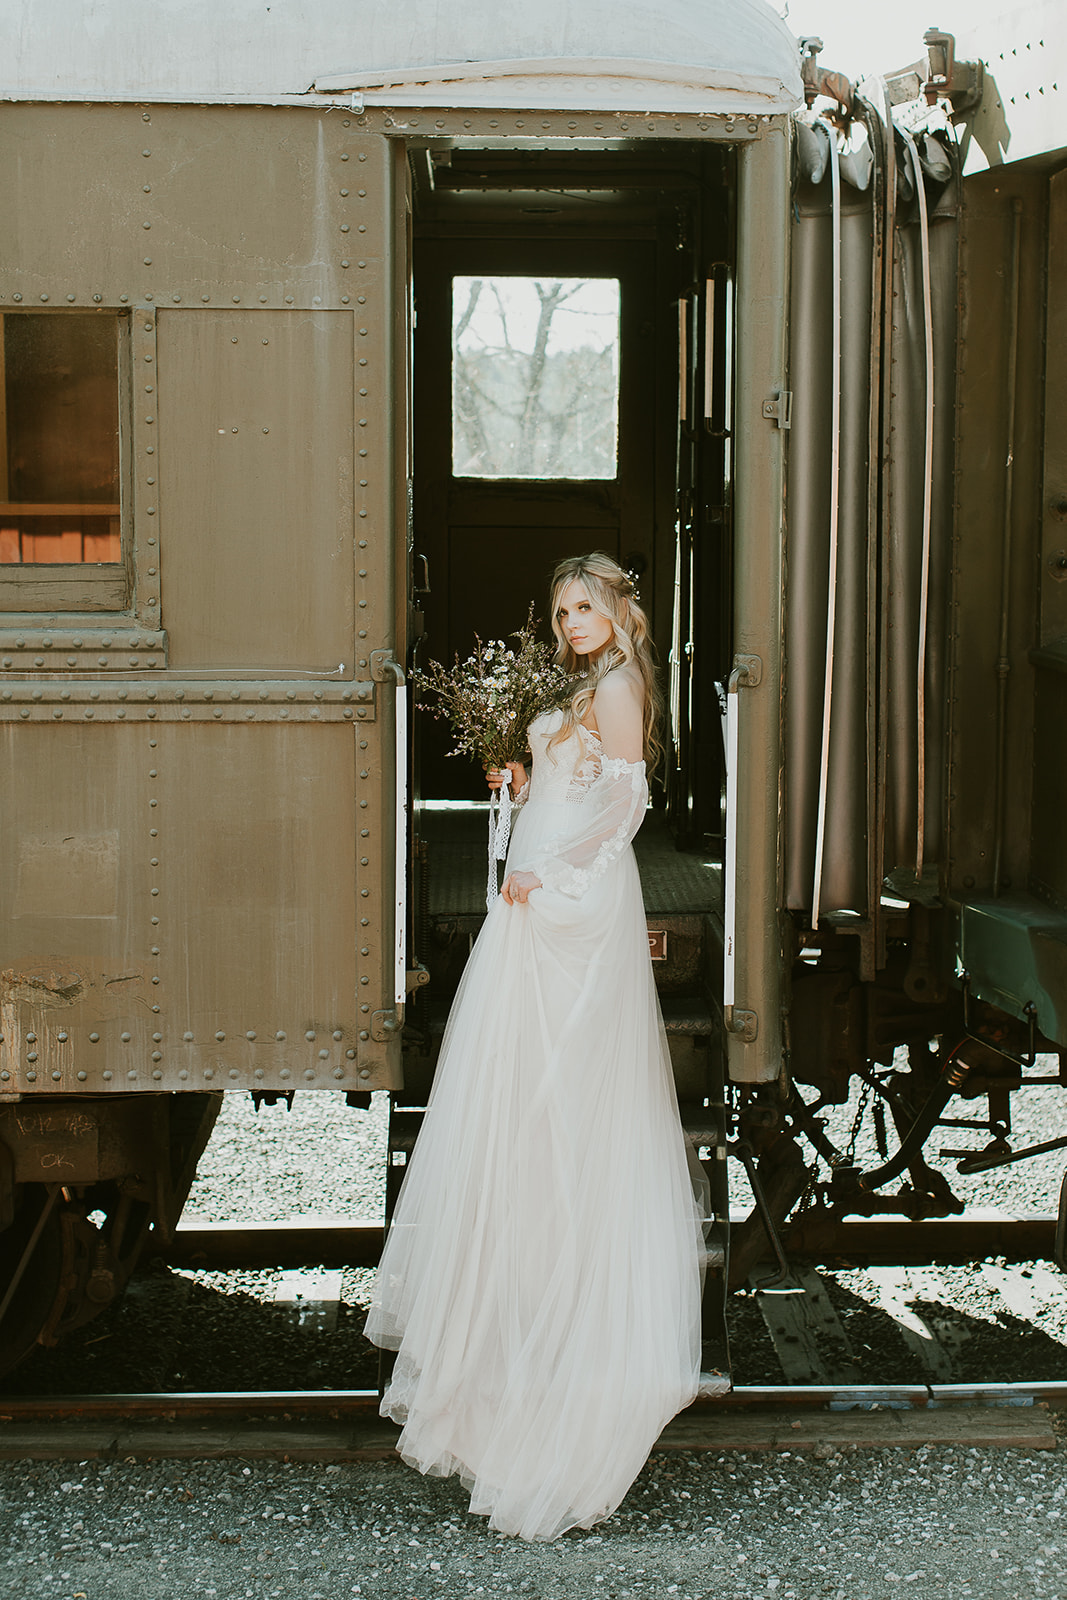 Wedding photo with historic railcar